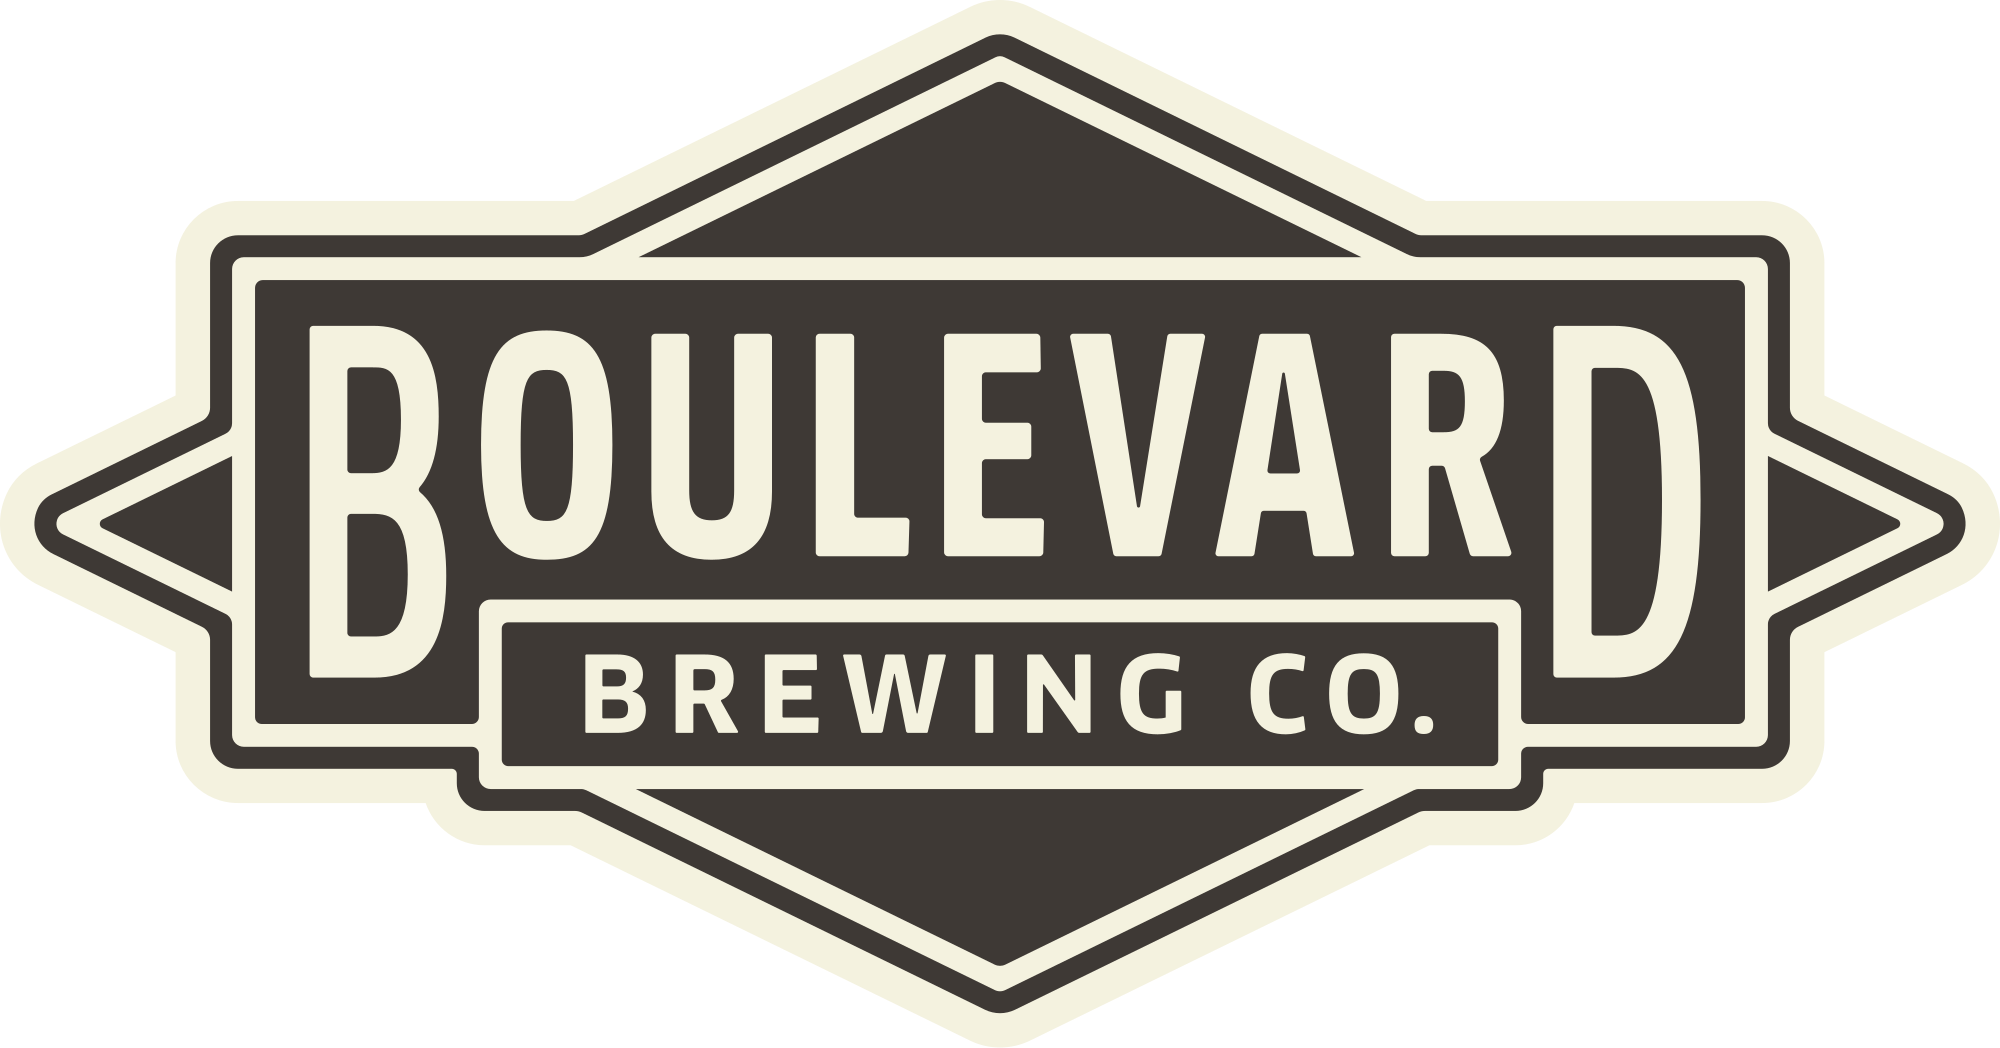 Brewery Logo - File:Boulevard Brewery logo.svg - Wikimedia Commons